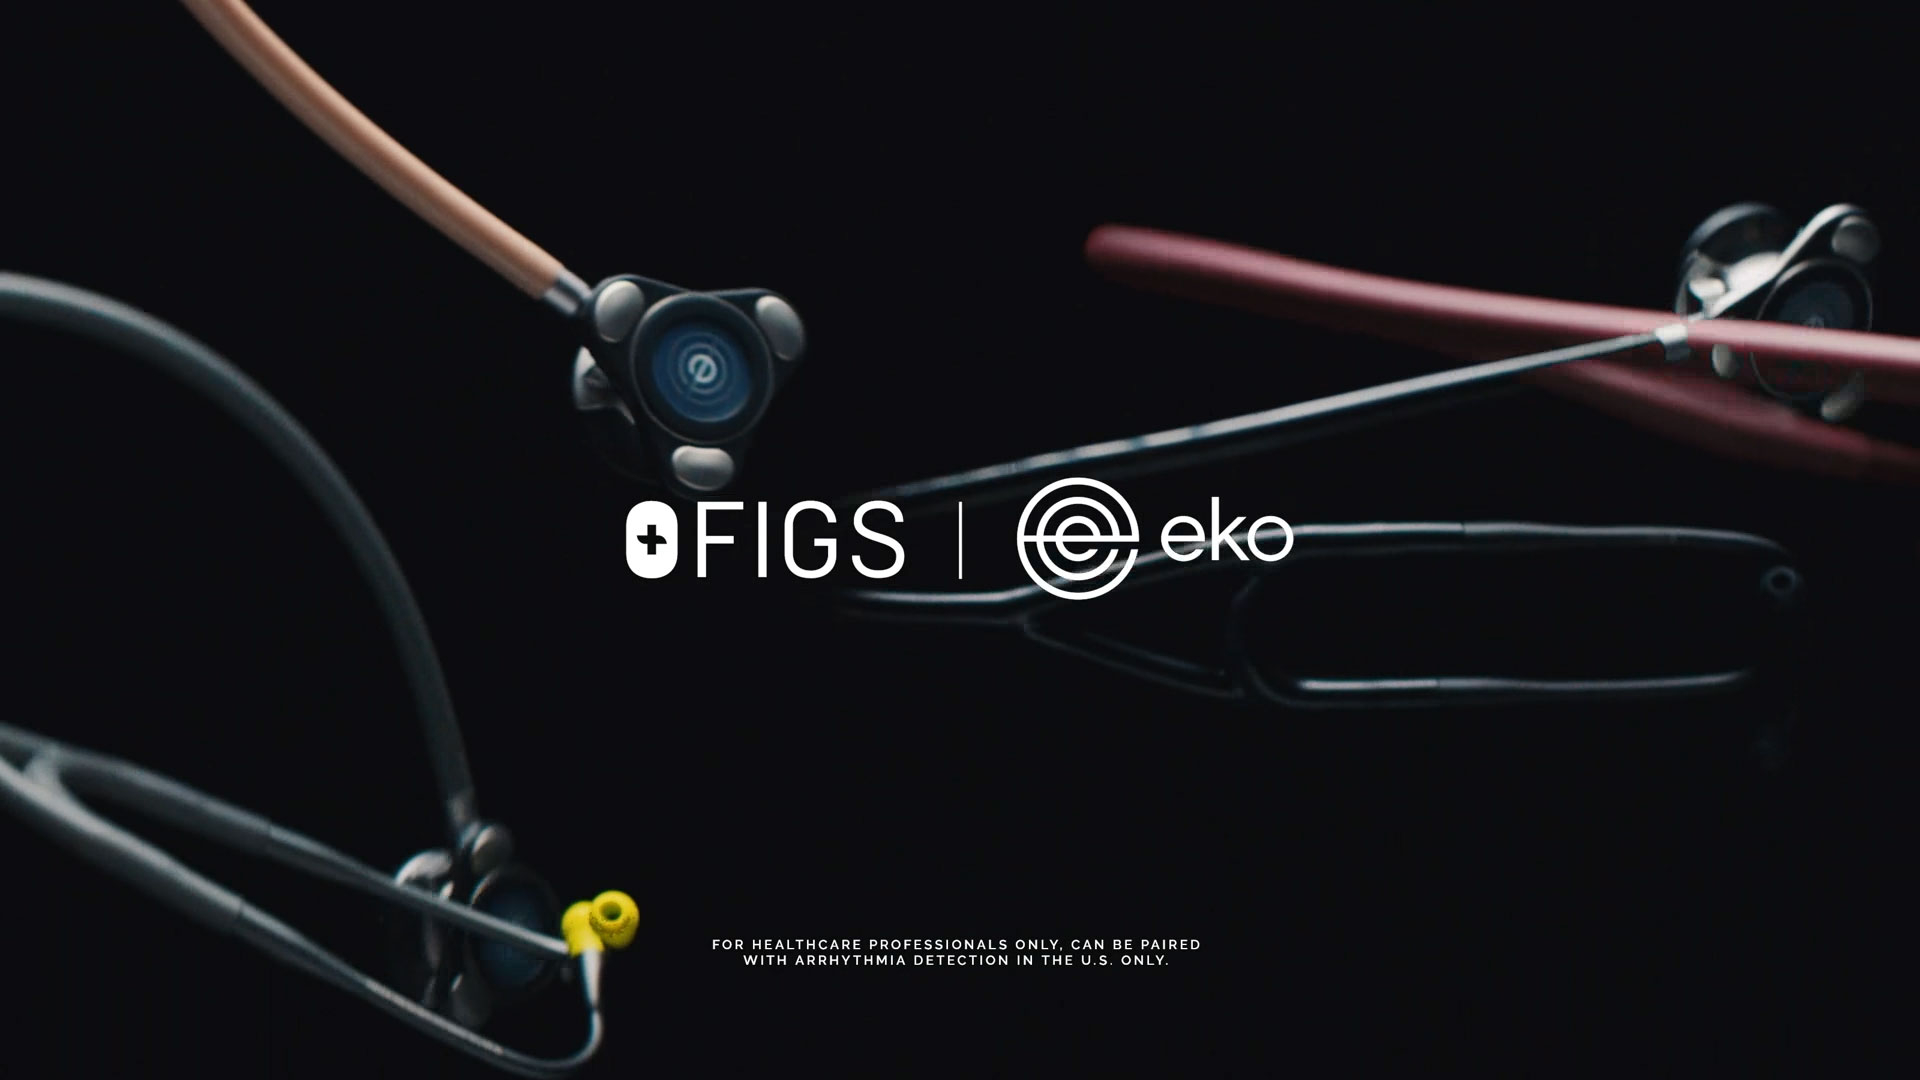 Figs | Eko Core 500 Digital Stethoscope Unisex Black O/S